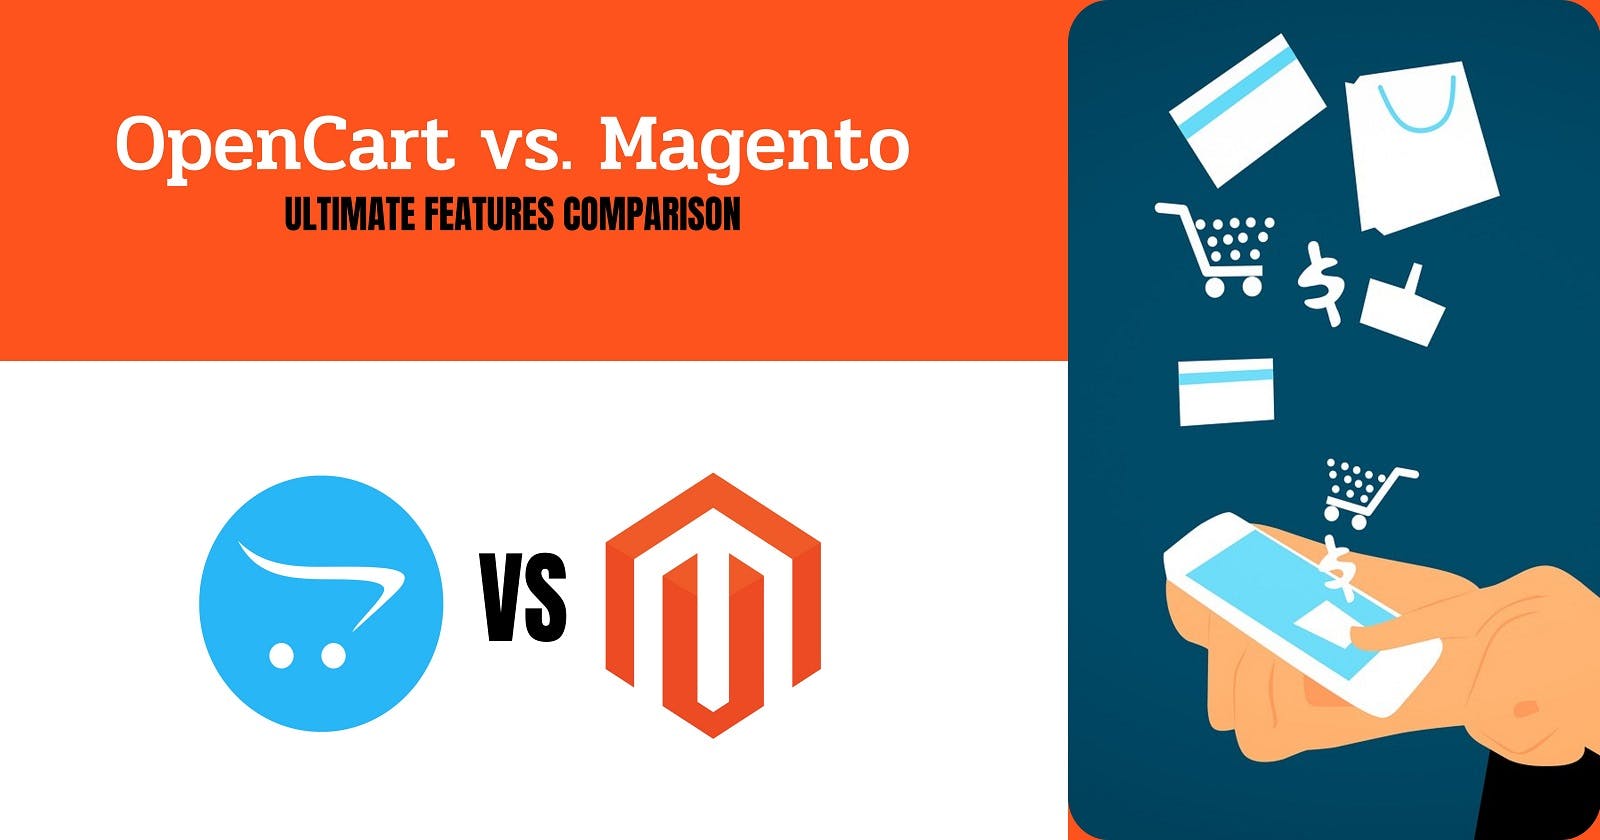 OpenCart vs. Magento - Ultimate Features Comparison